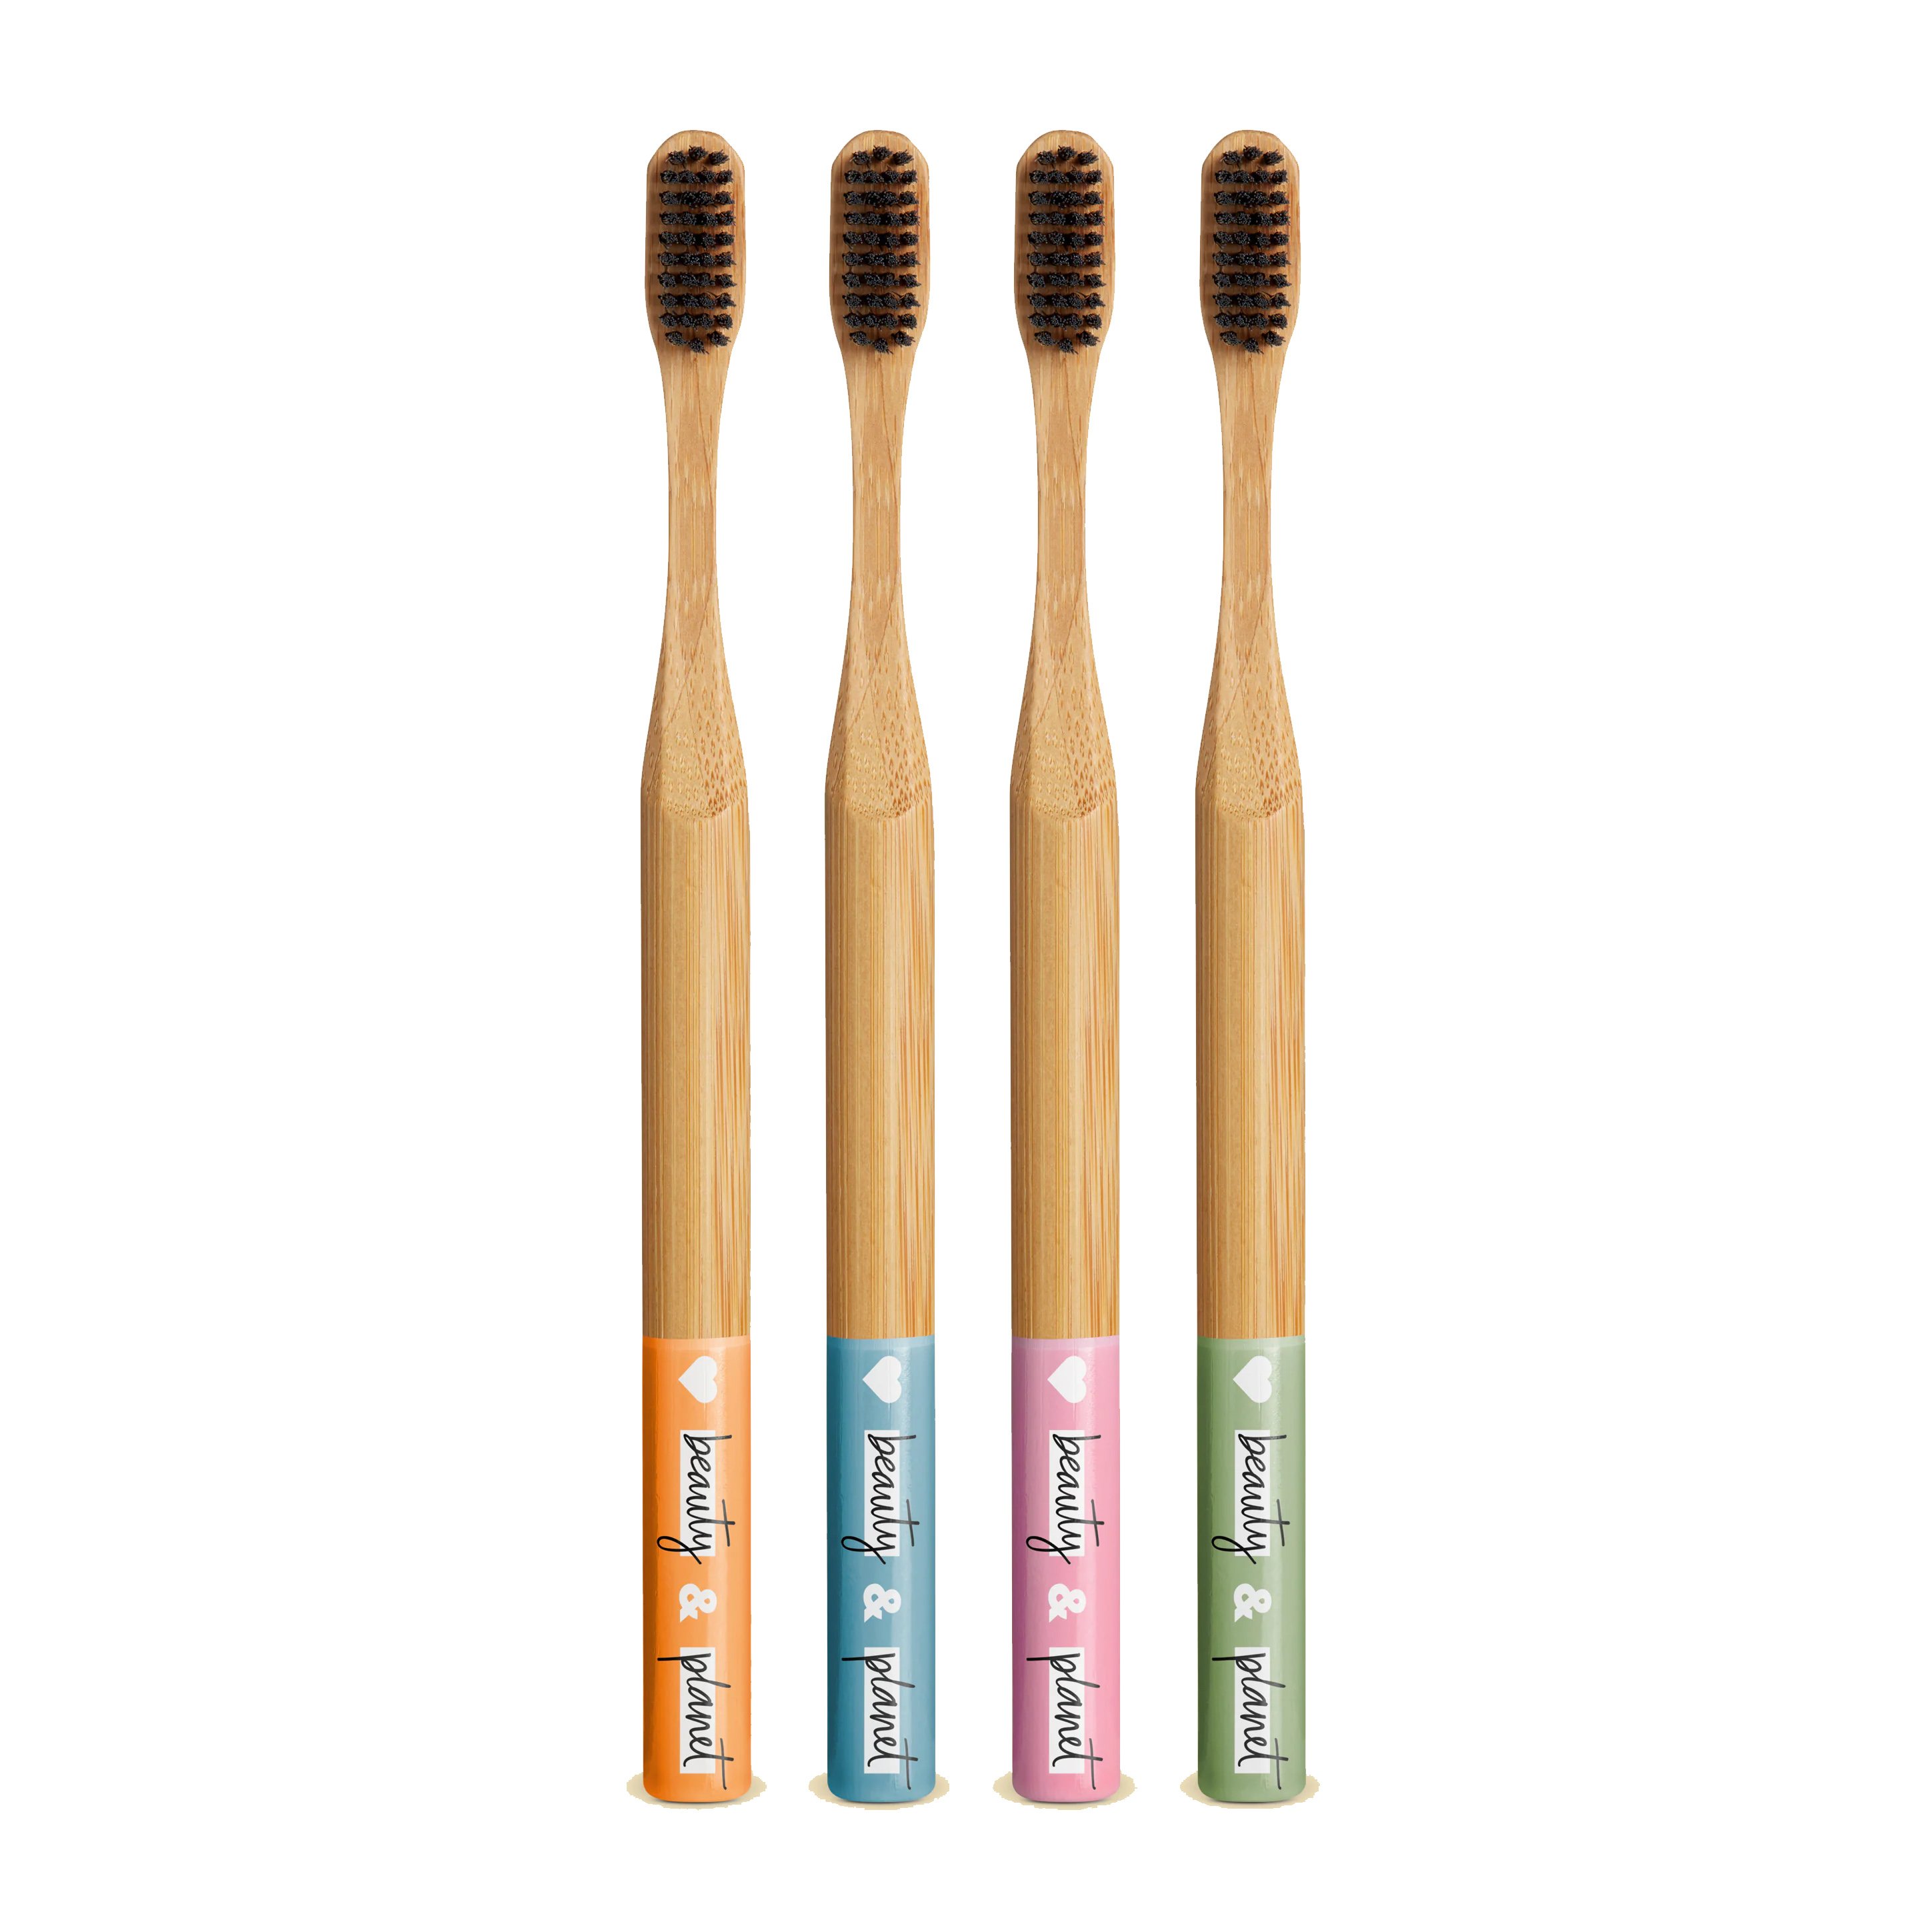 Love Beauty & Planet Bamboo Toothbrush Soft Μαλακή Οδοντόβουρτσα Από 100% Φυσικό Μπαμπού 1 Τεμάχιο ( Τυχαία Επιλογή Χρώματος)